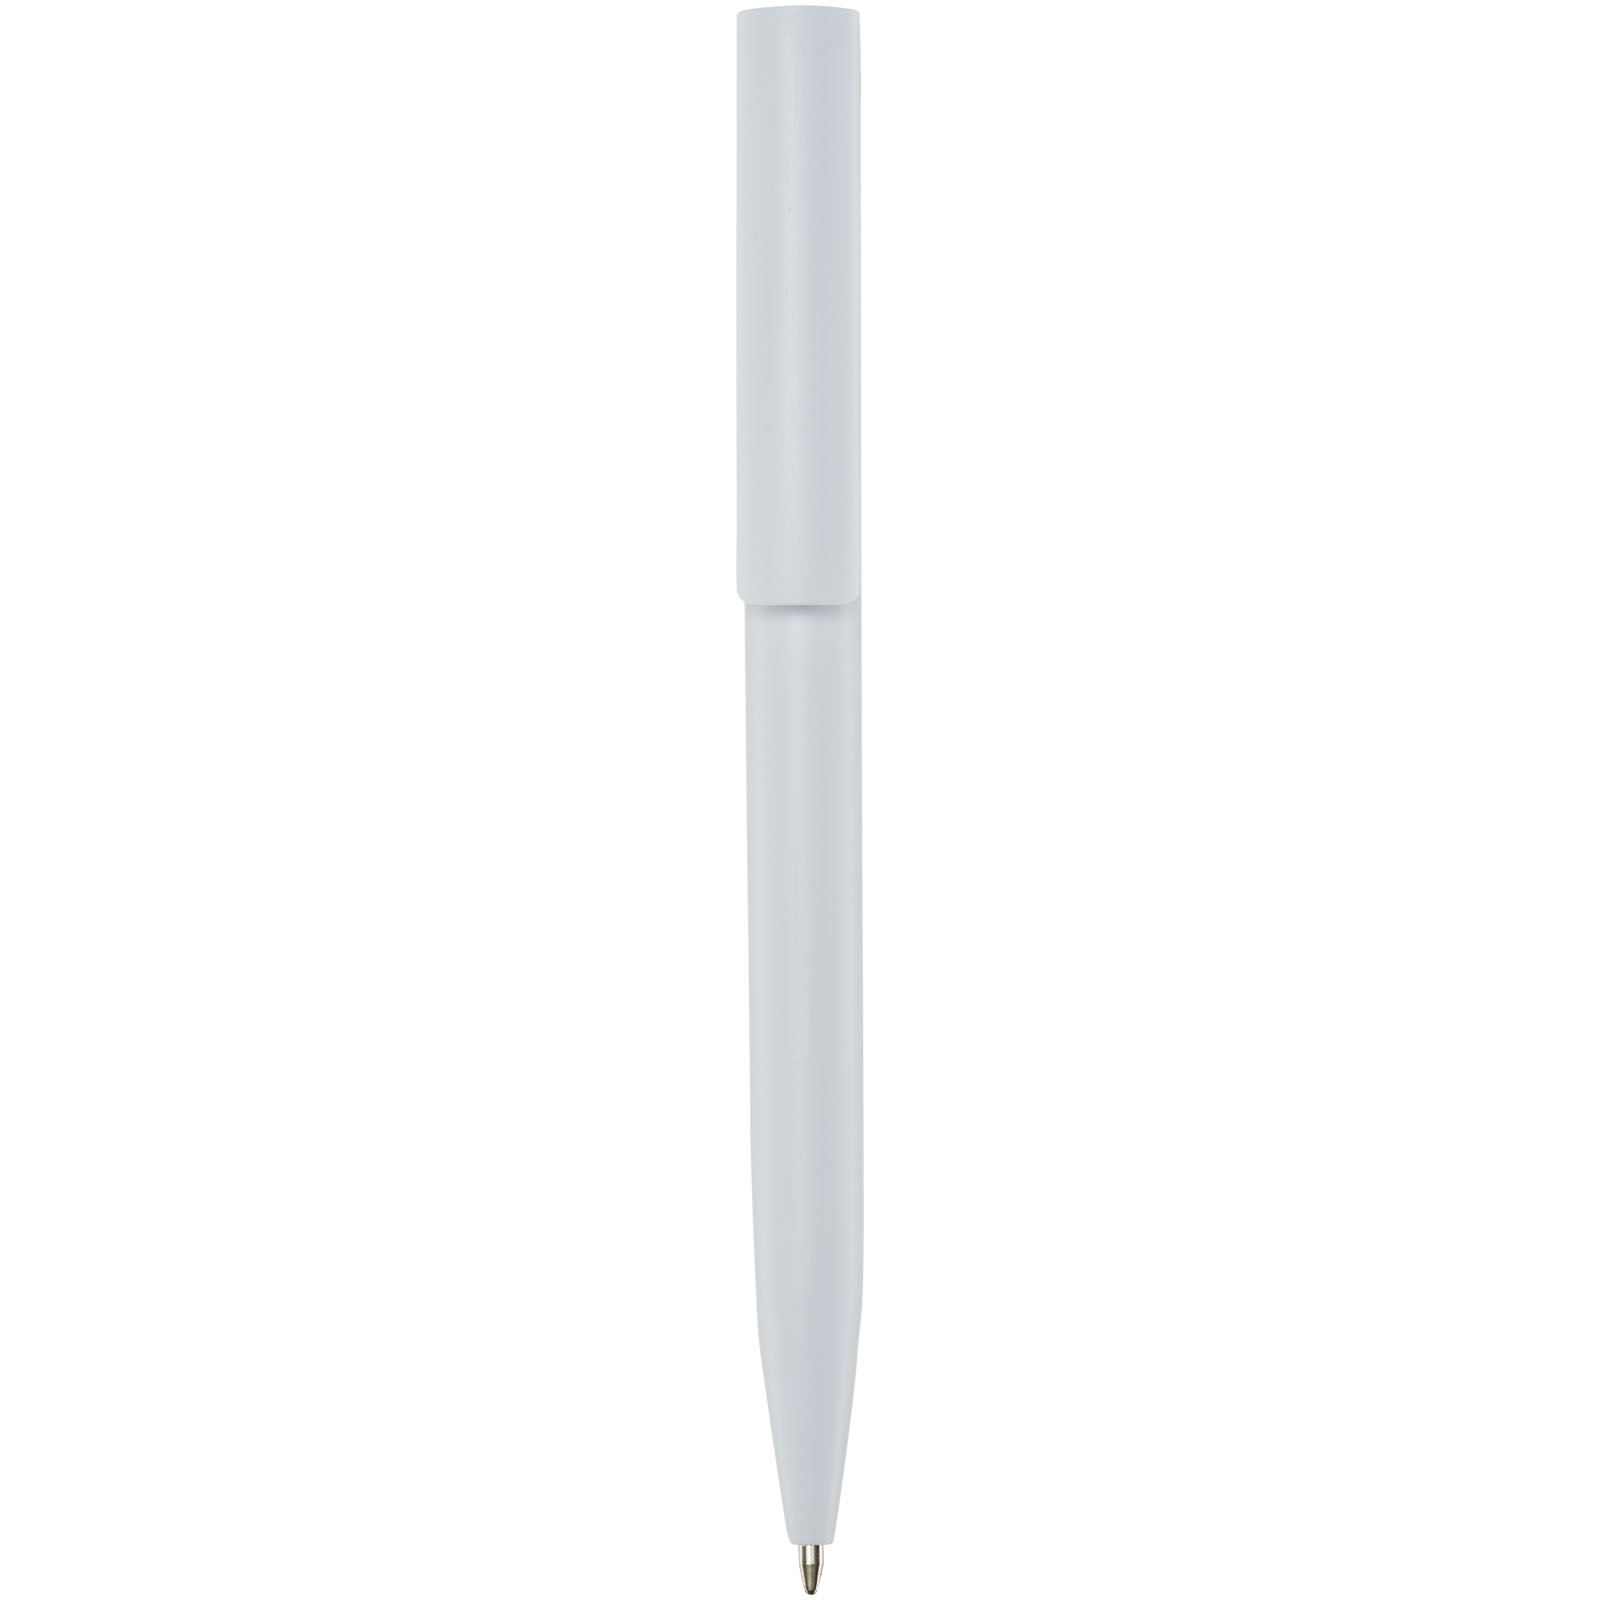 Advertising Ballpoint Pens - Unix recycled plastic ballpoint pen